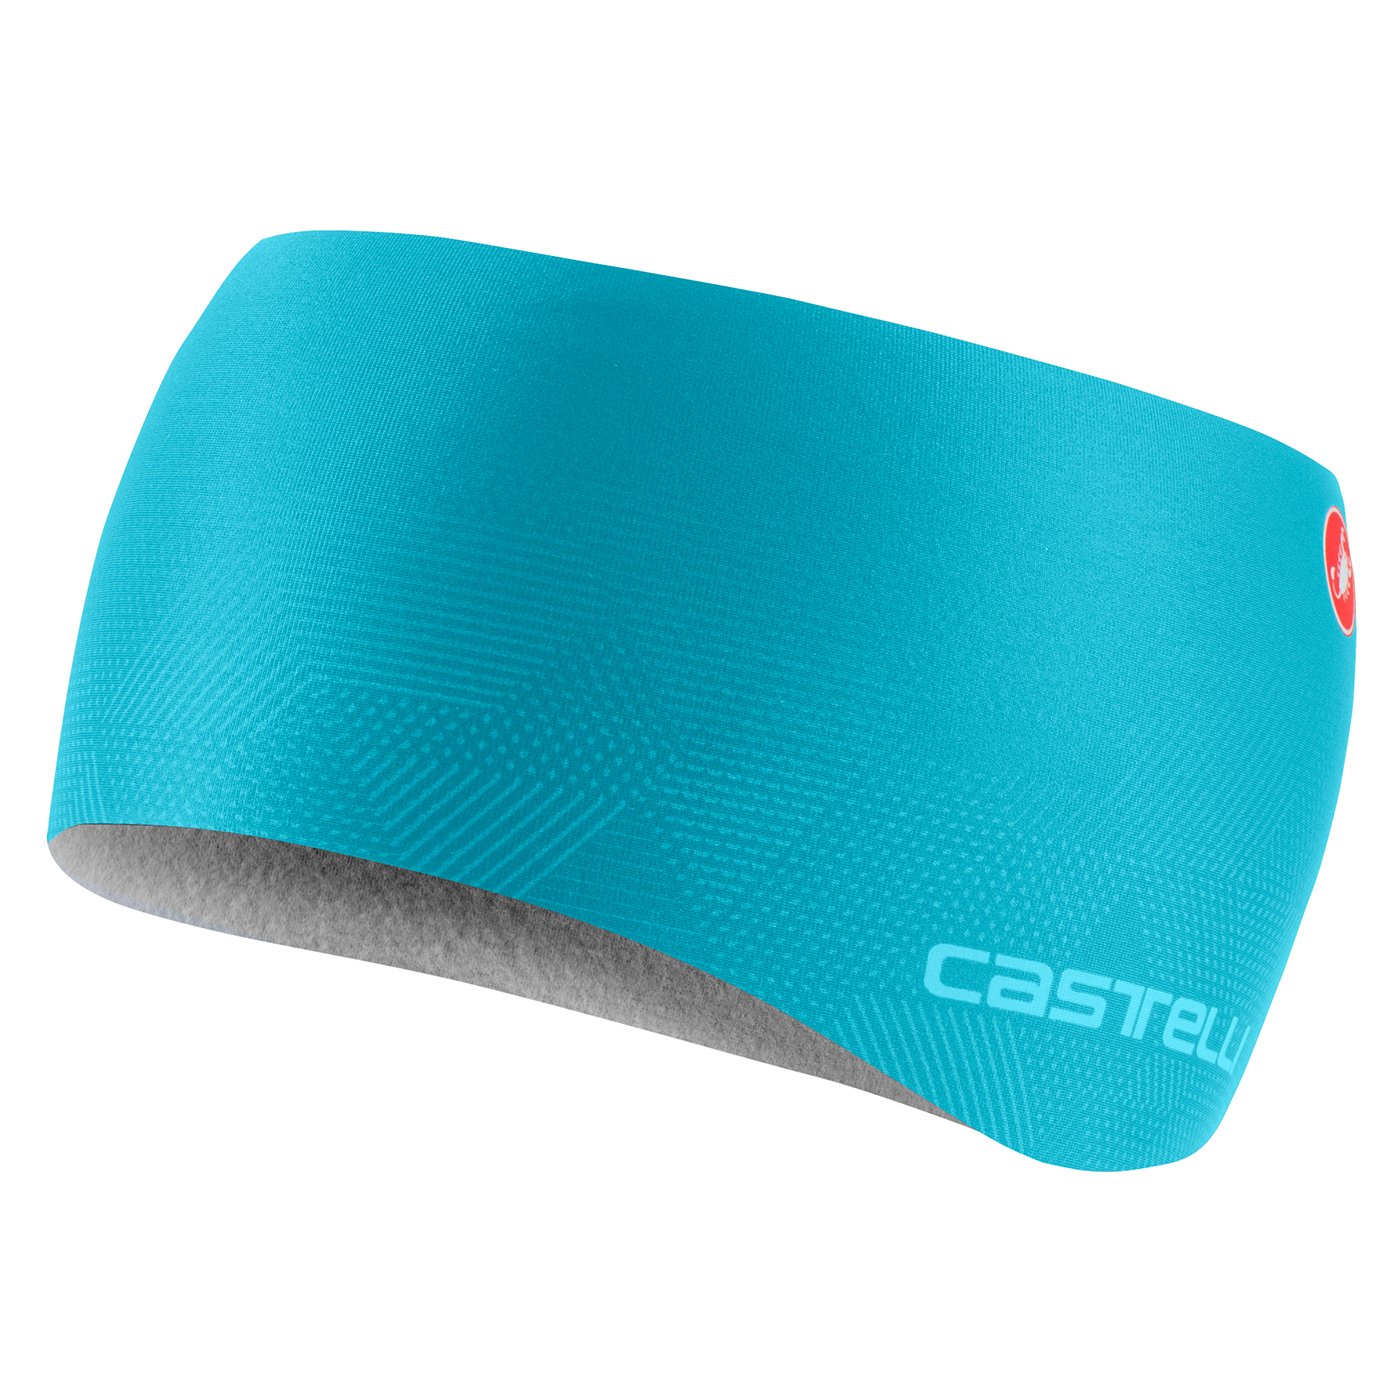 Castelli Pro Thermal Headband (Teal Blue)